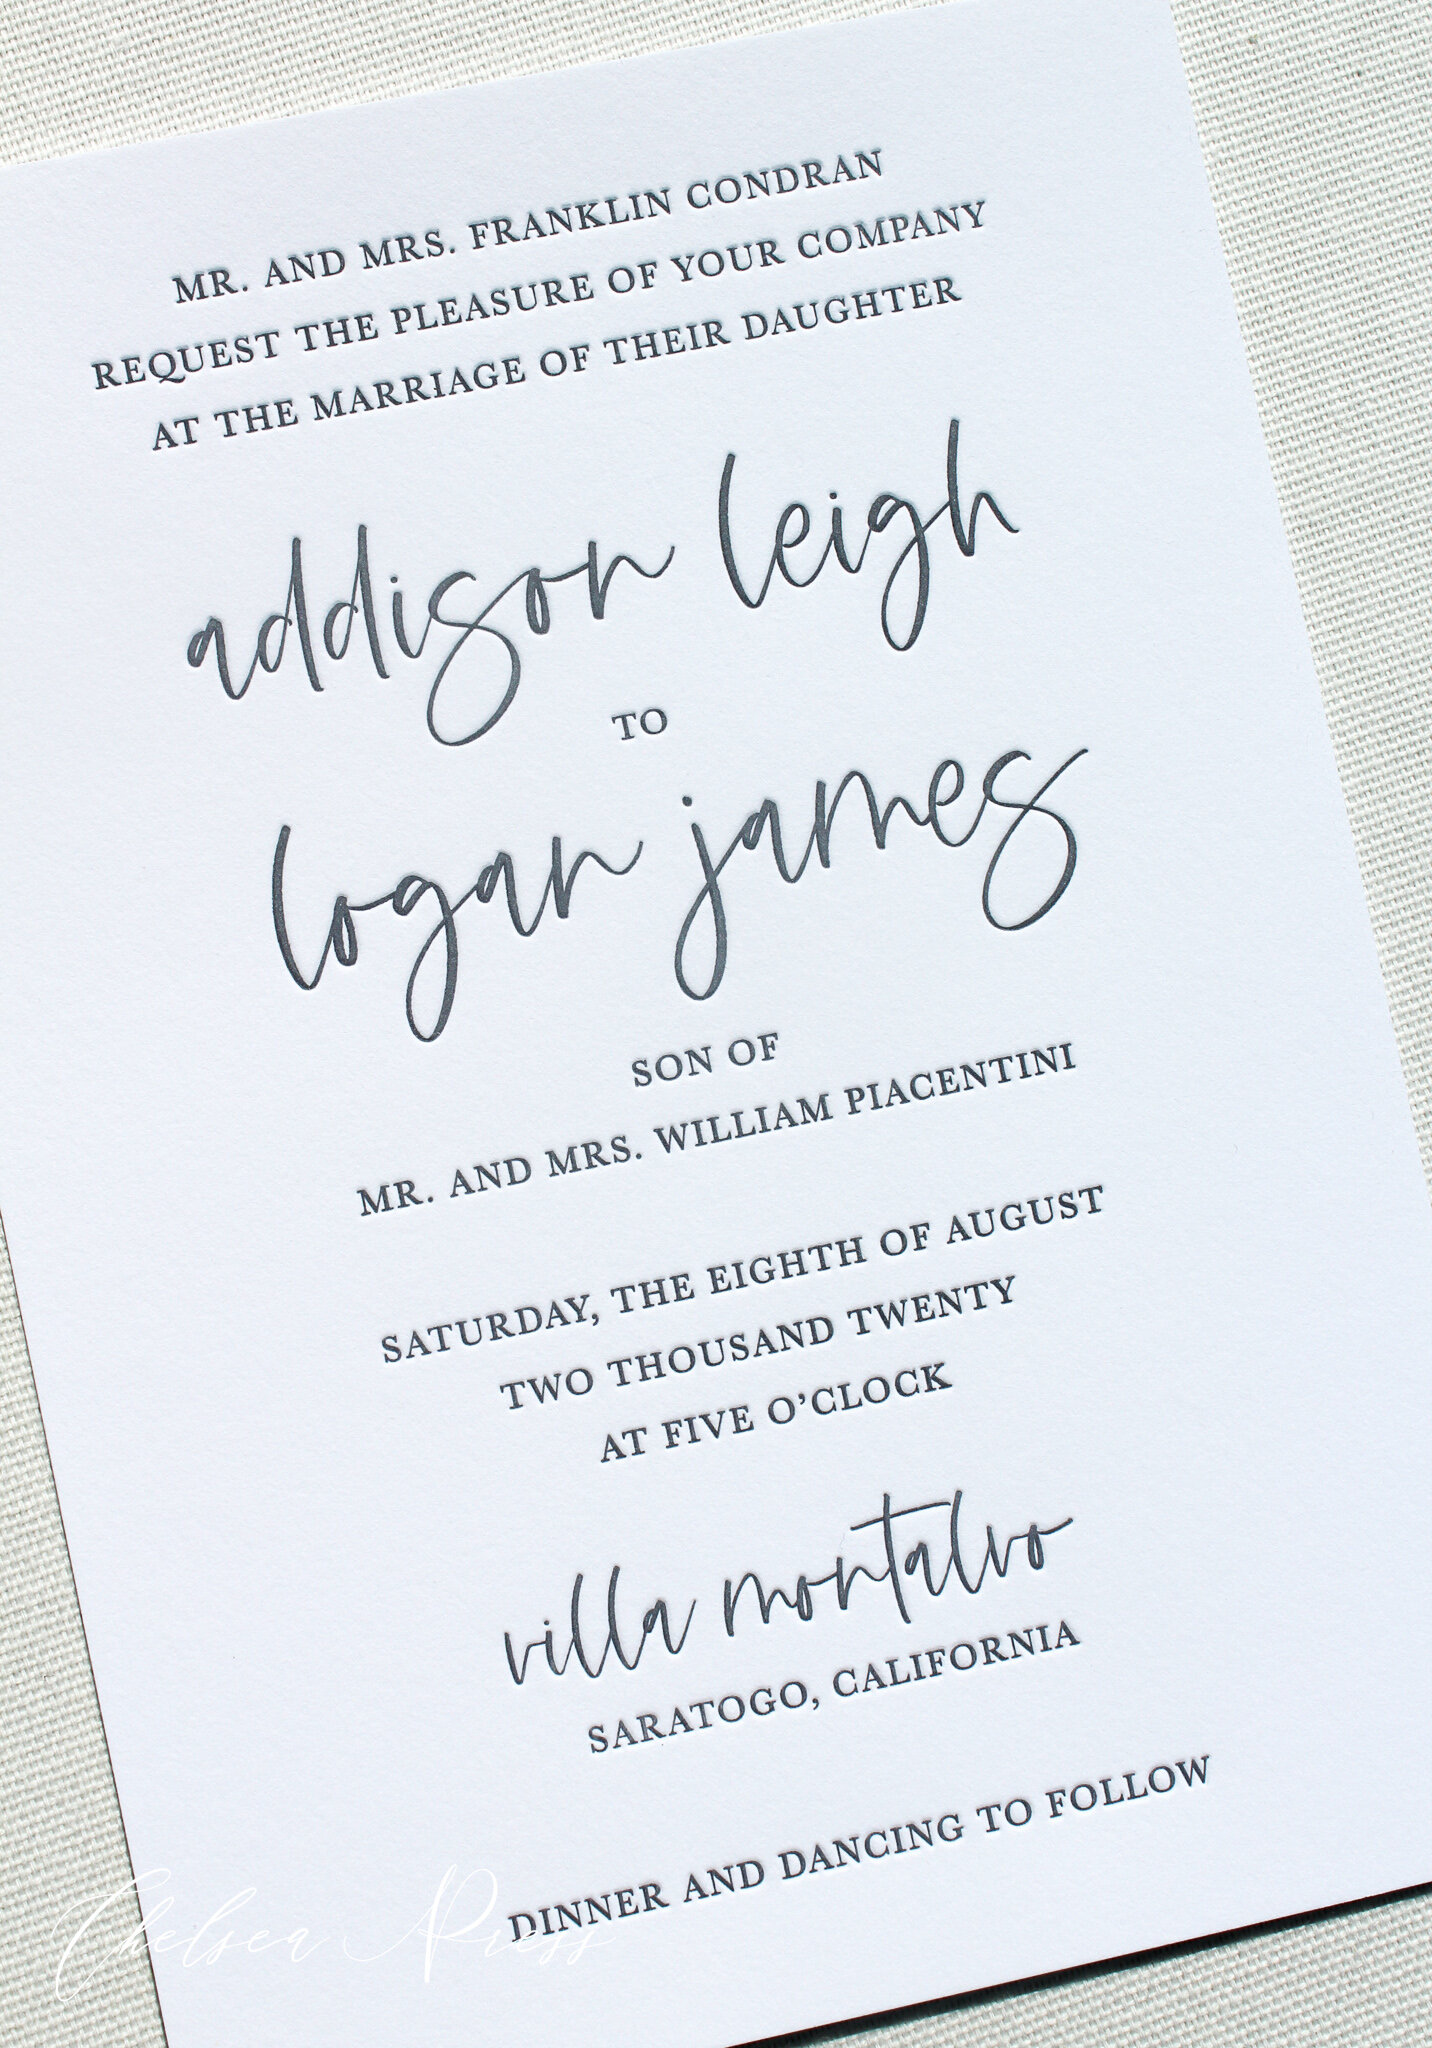 Chelsea Press Invitations-Addison and Logan wedding invitation.jpg